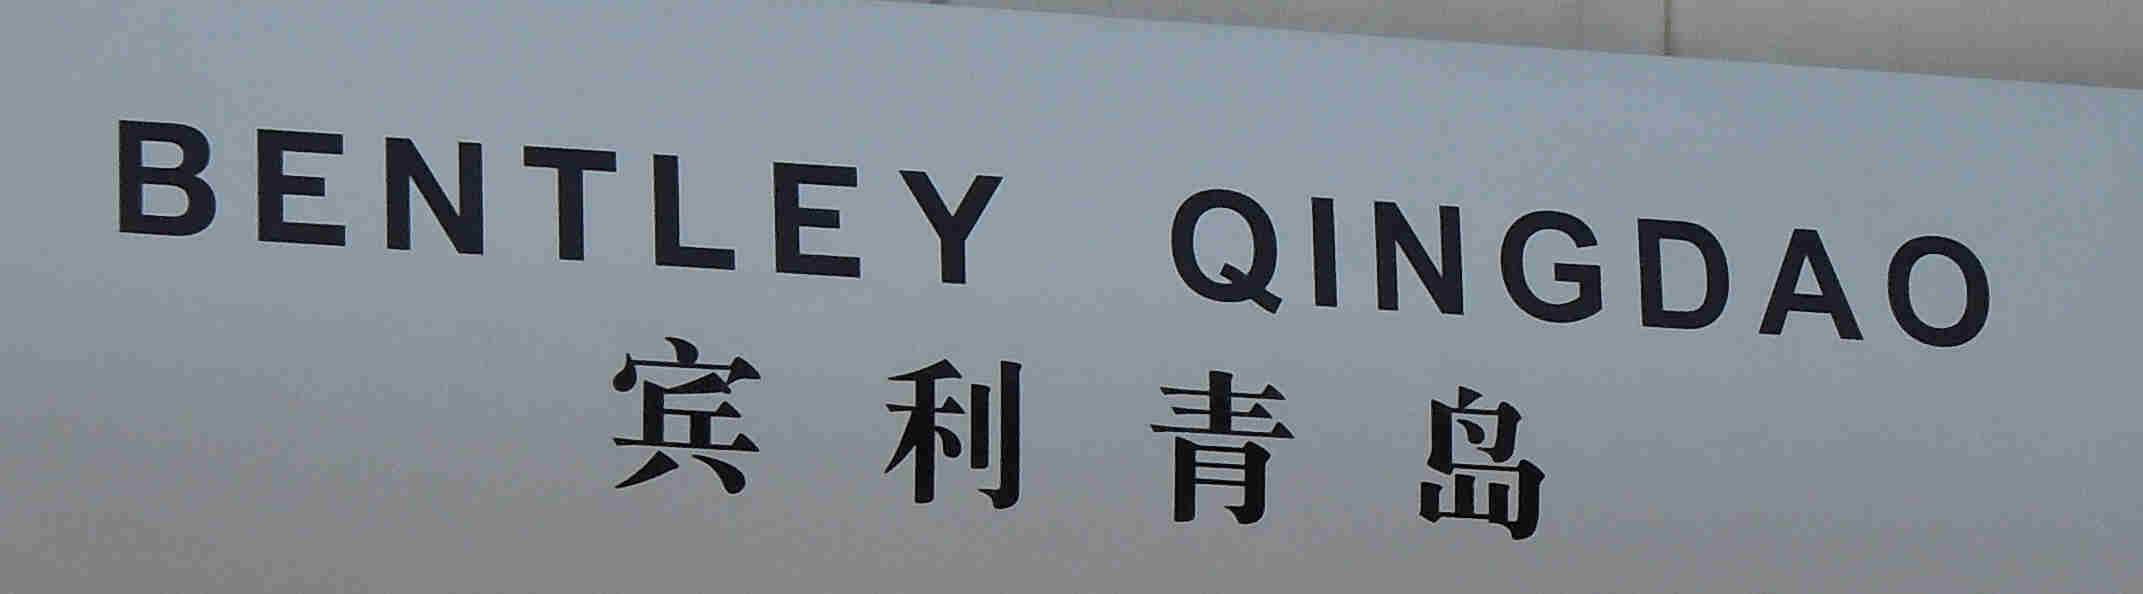 Bentley Qingdao